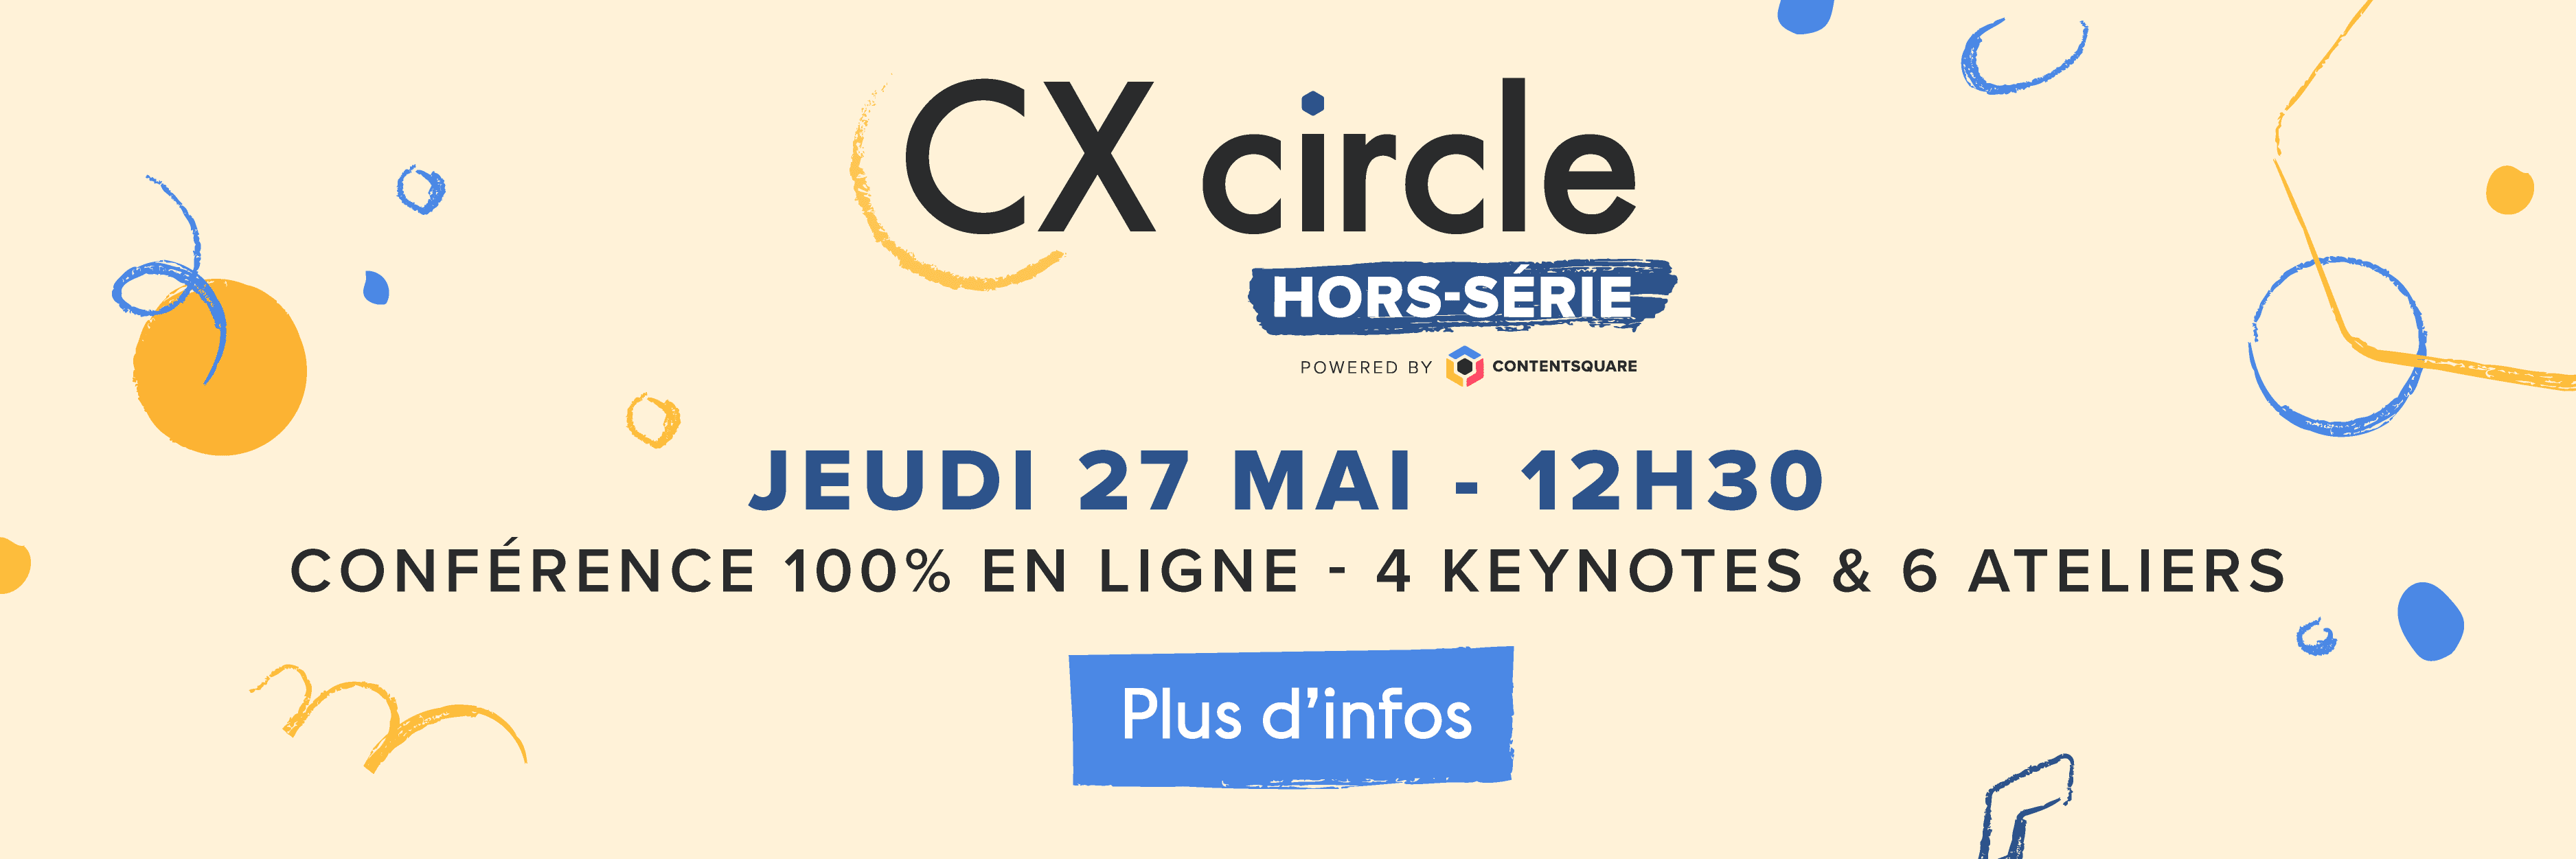 CX Circle Hors-serie